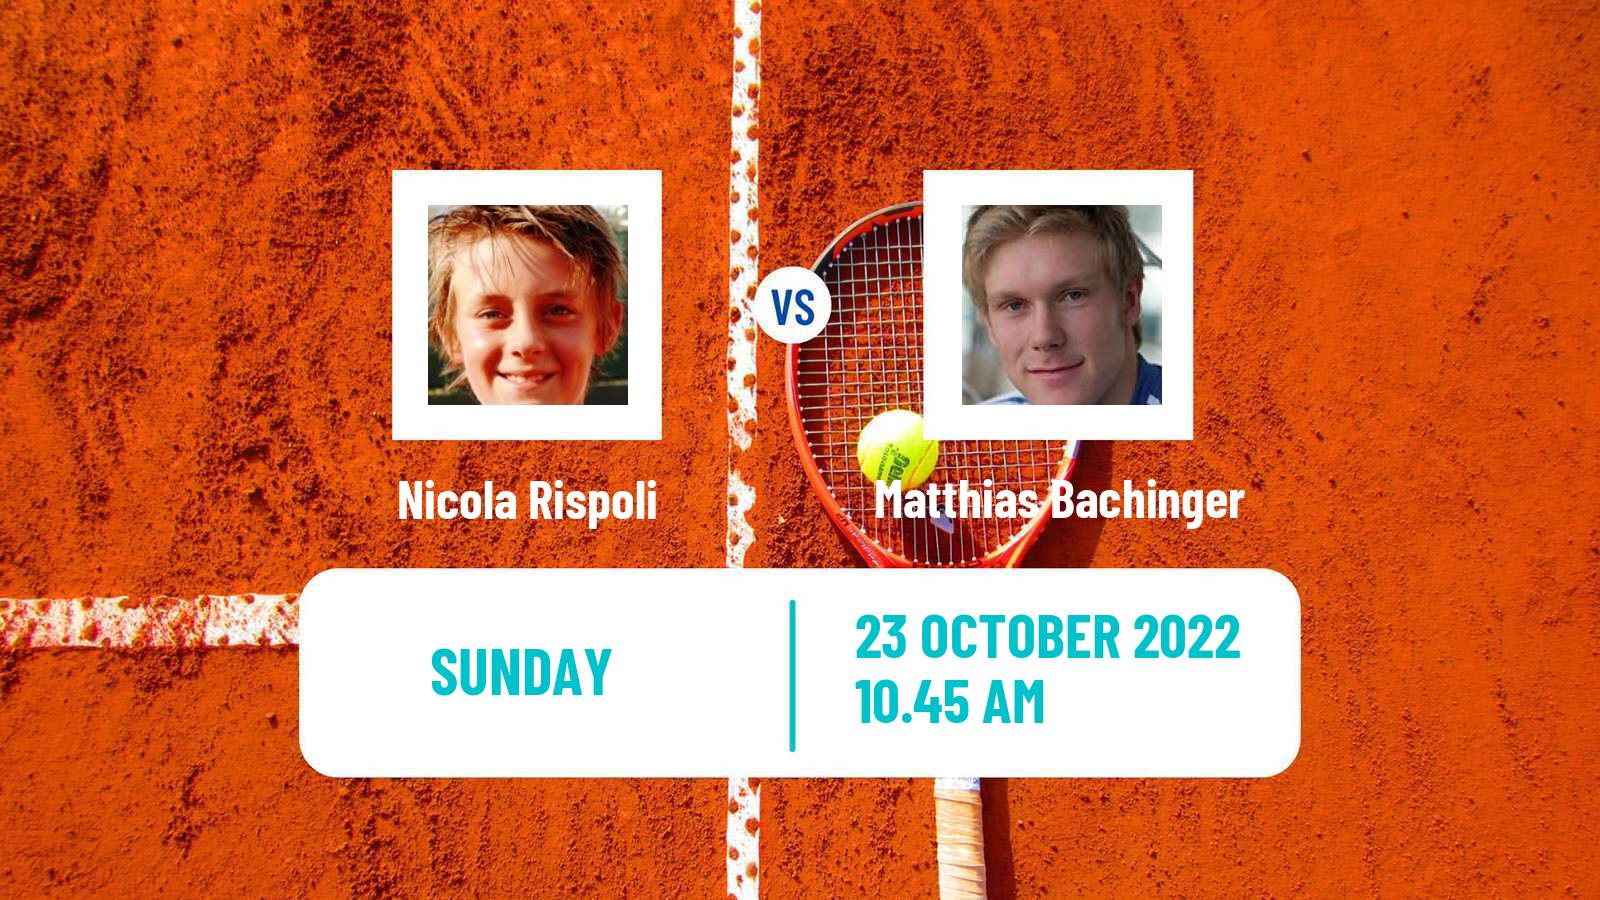 Tennis ATP Challenger Nicola Rispoli - Matthias Bachinger